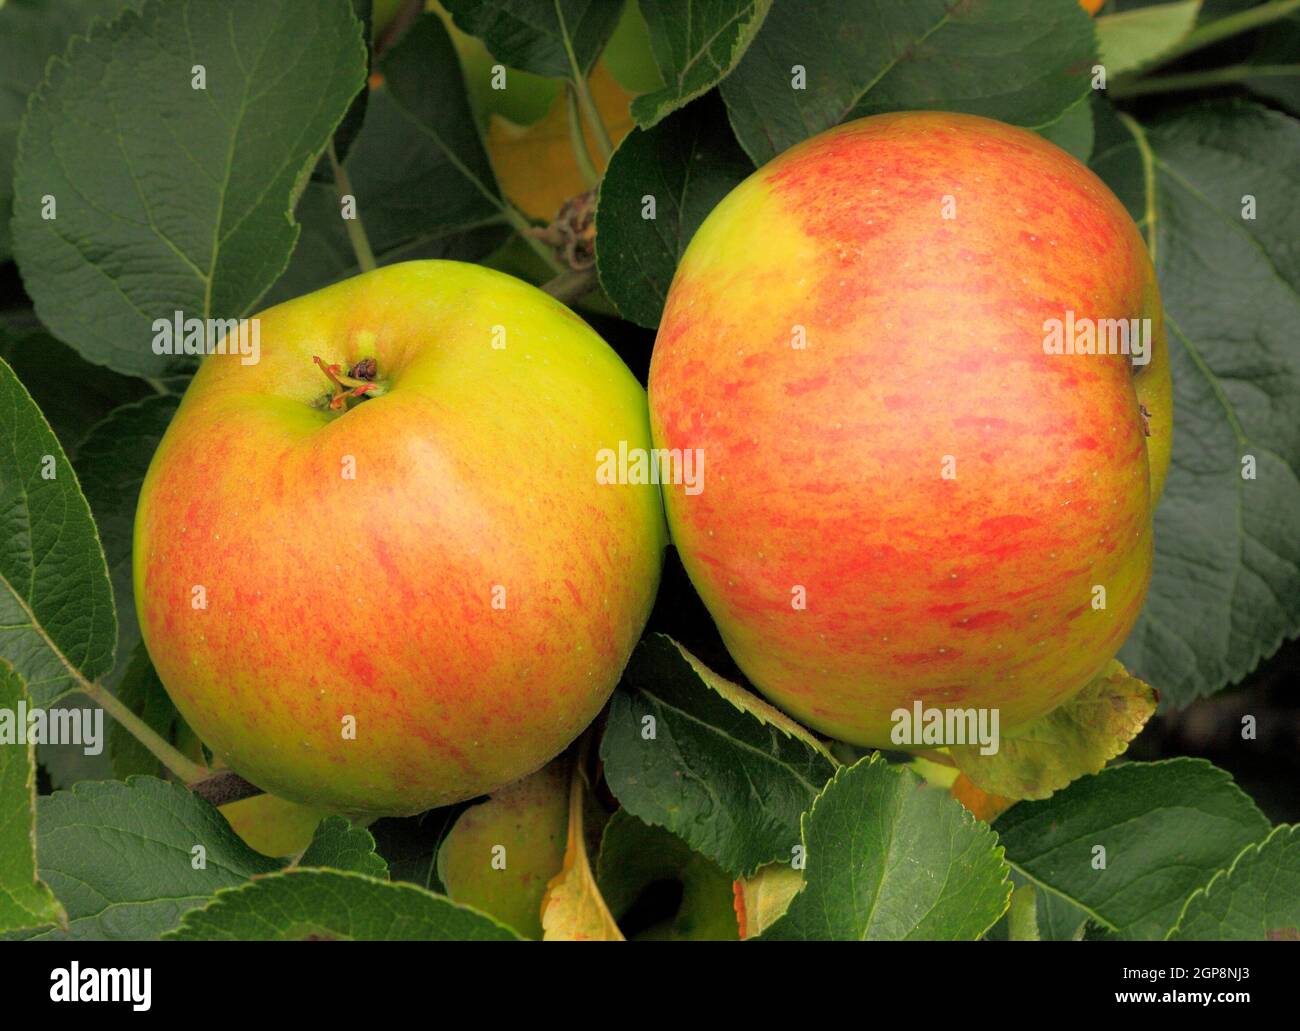 Pomme 'Bramley's seedling', 'Bramley', pommes, fruit, croissant sur arbre, malus domestica, saine alimentation Banque D'Images